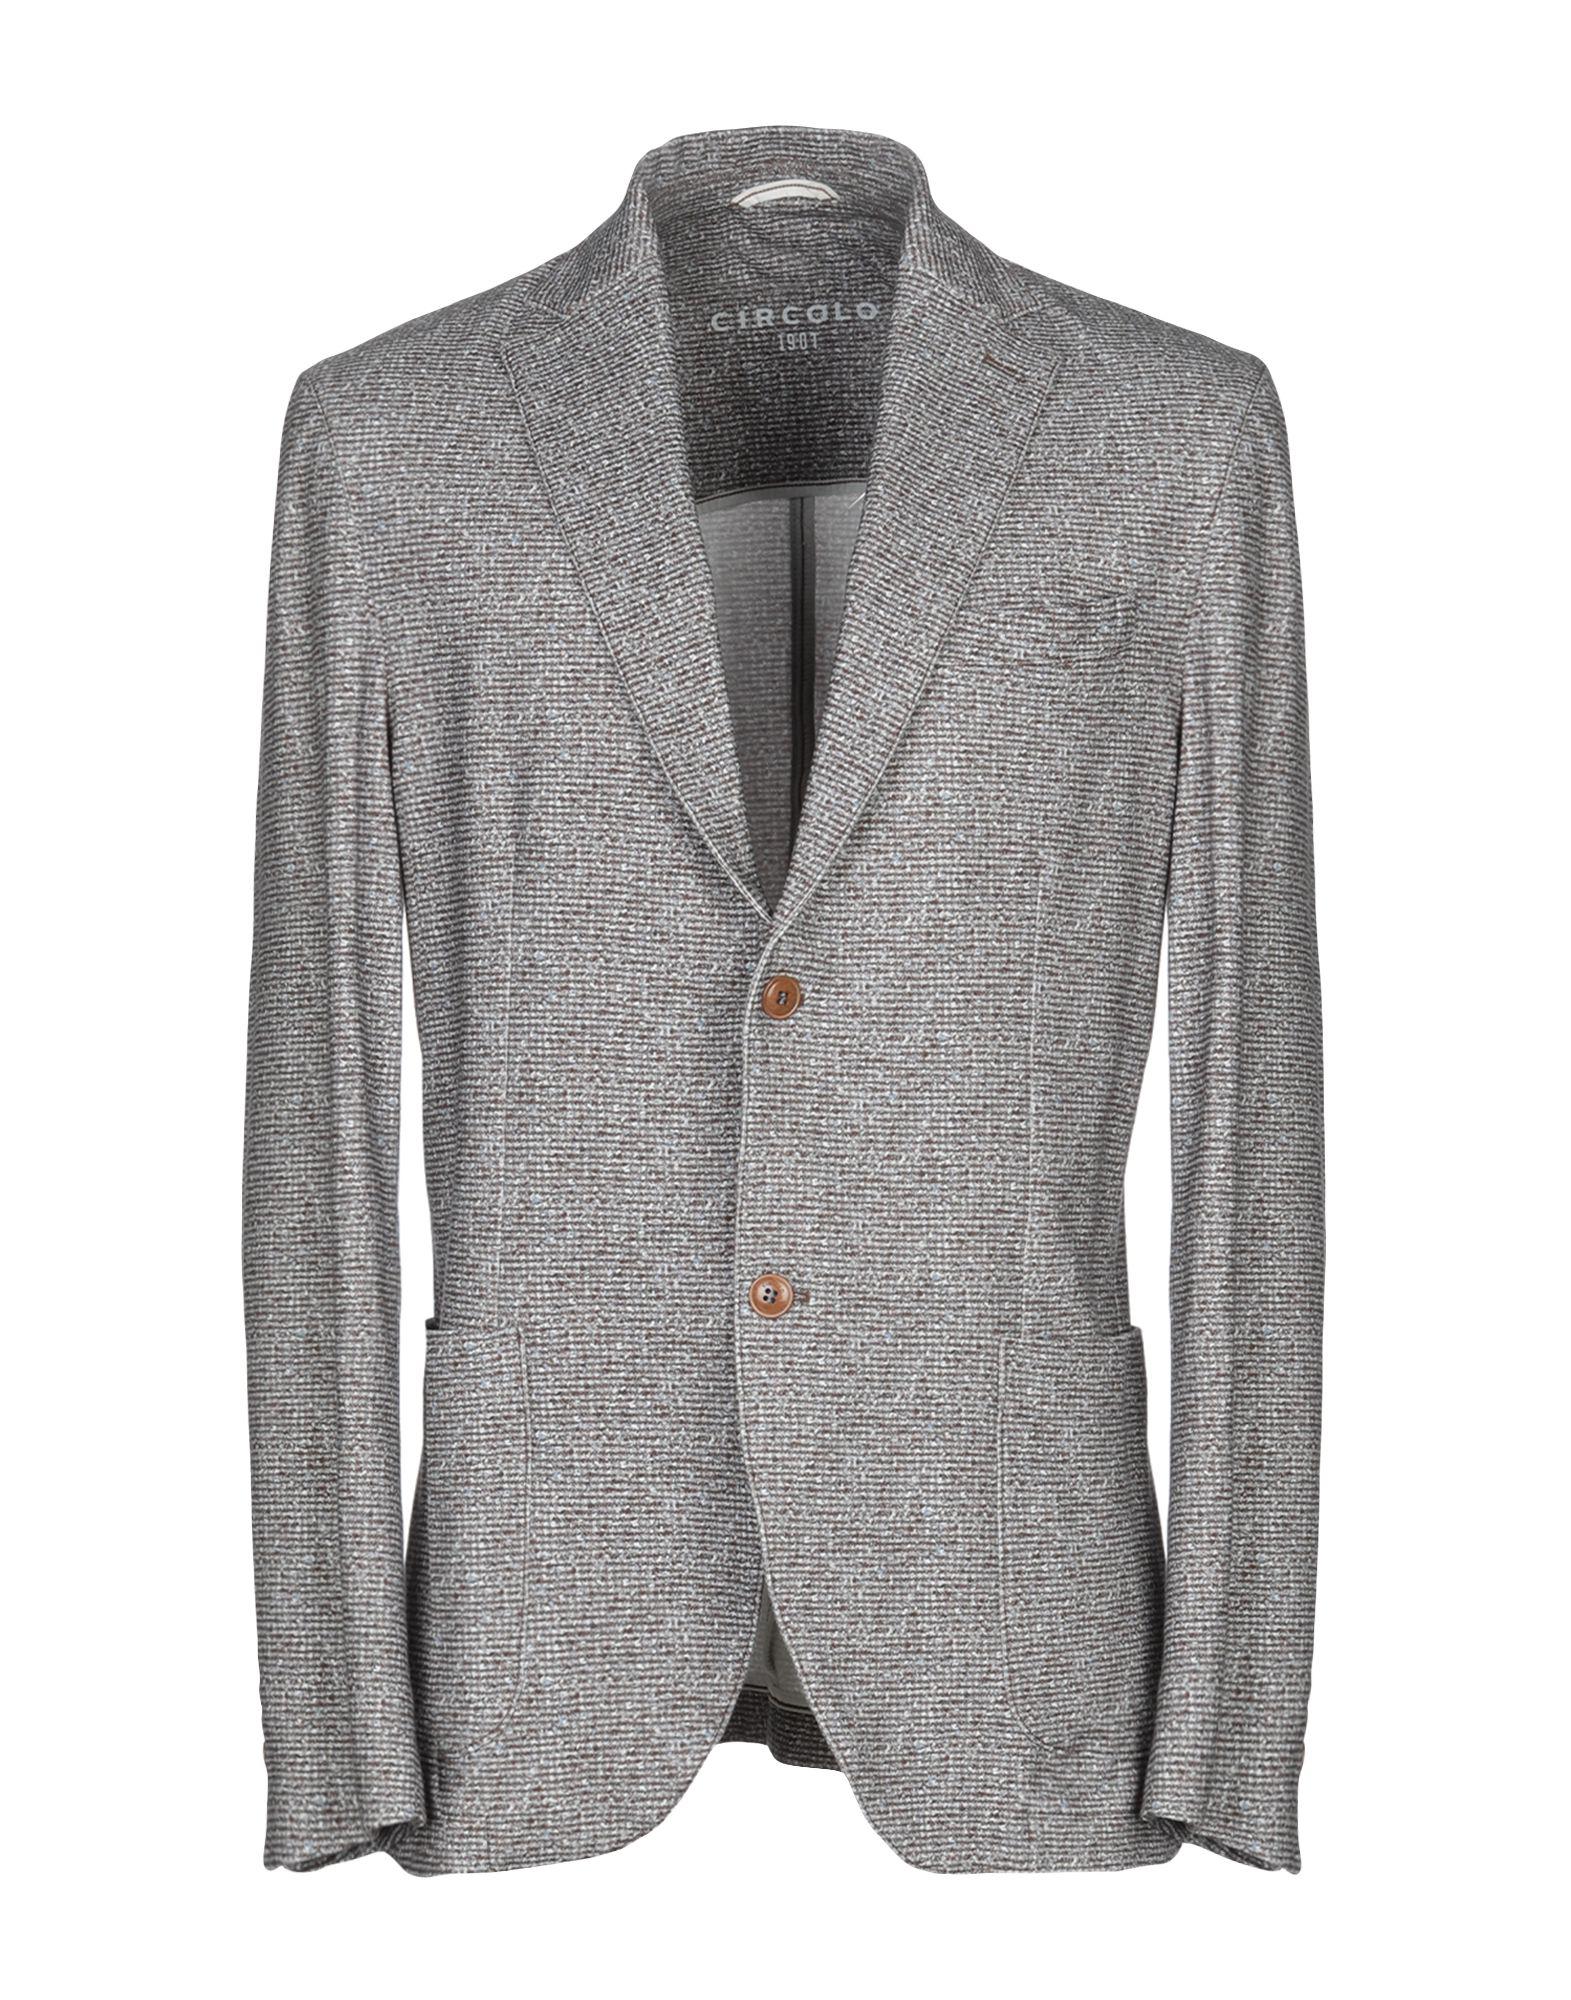 Circolo 1901 Flannel Blazer in Light Grey (Gray) for Men - Lyst